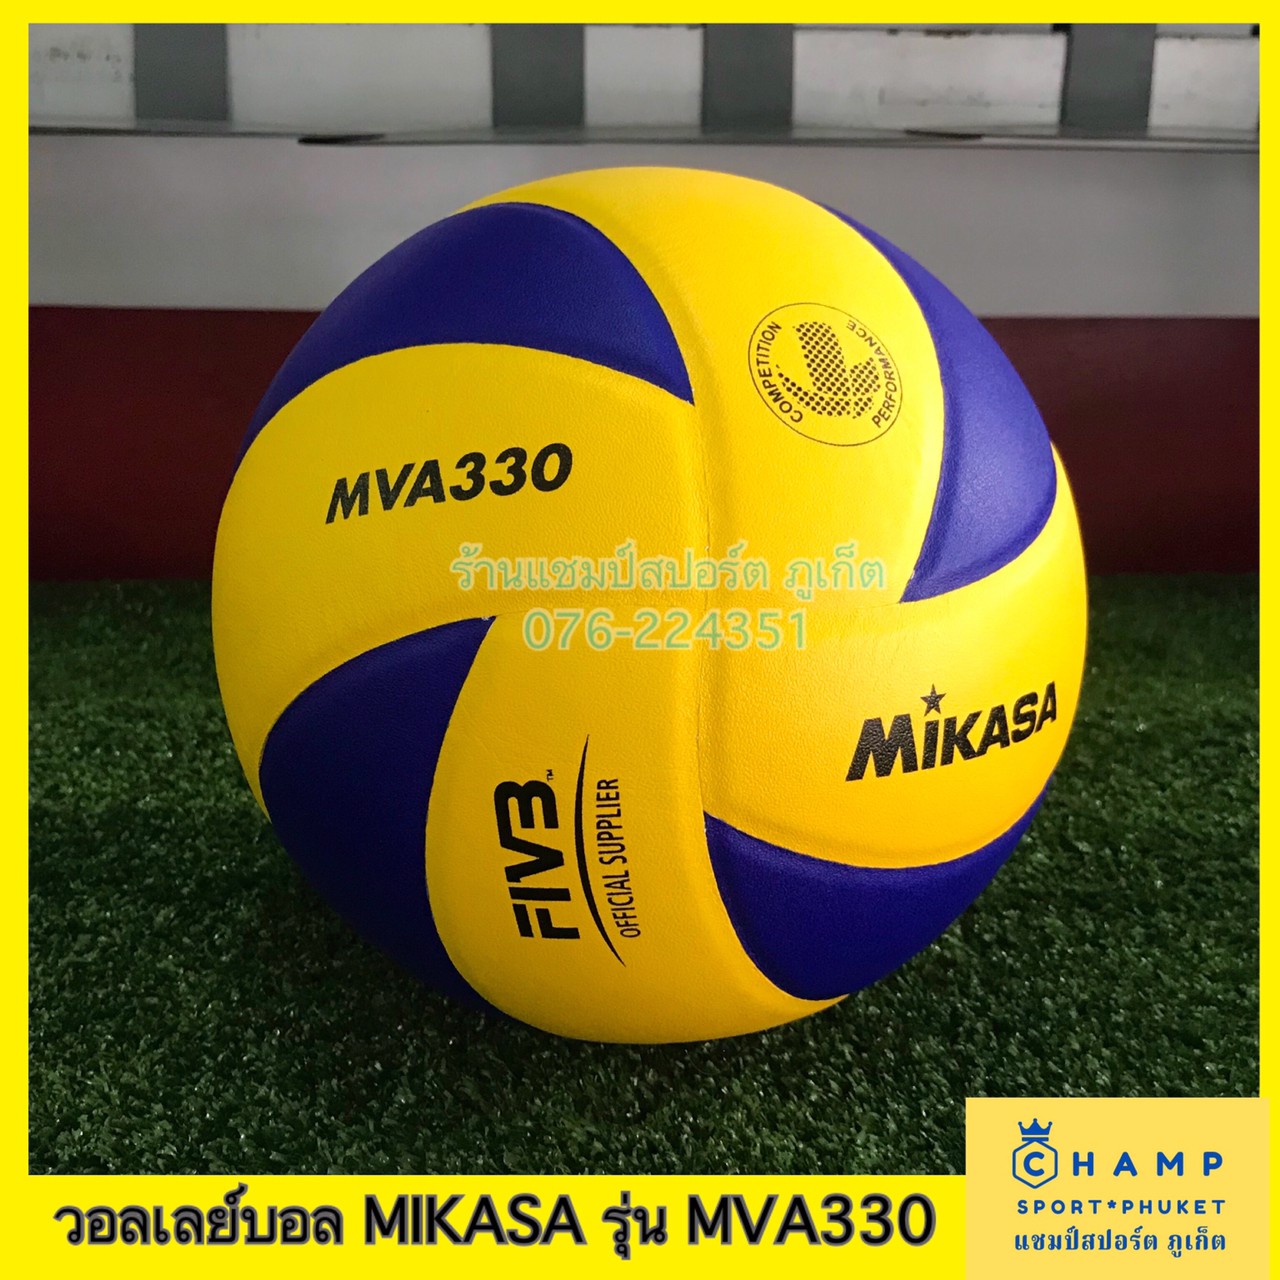 MIKASA ลูกวอลเลย์บอล MVA330 ลิขสิทธ์แท้!! MIKASA Volleyball